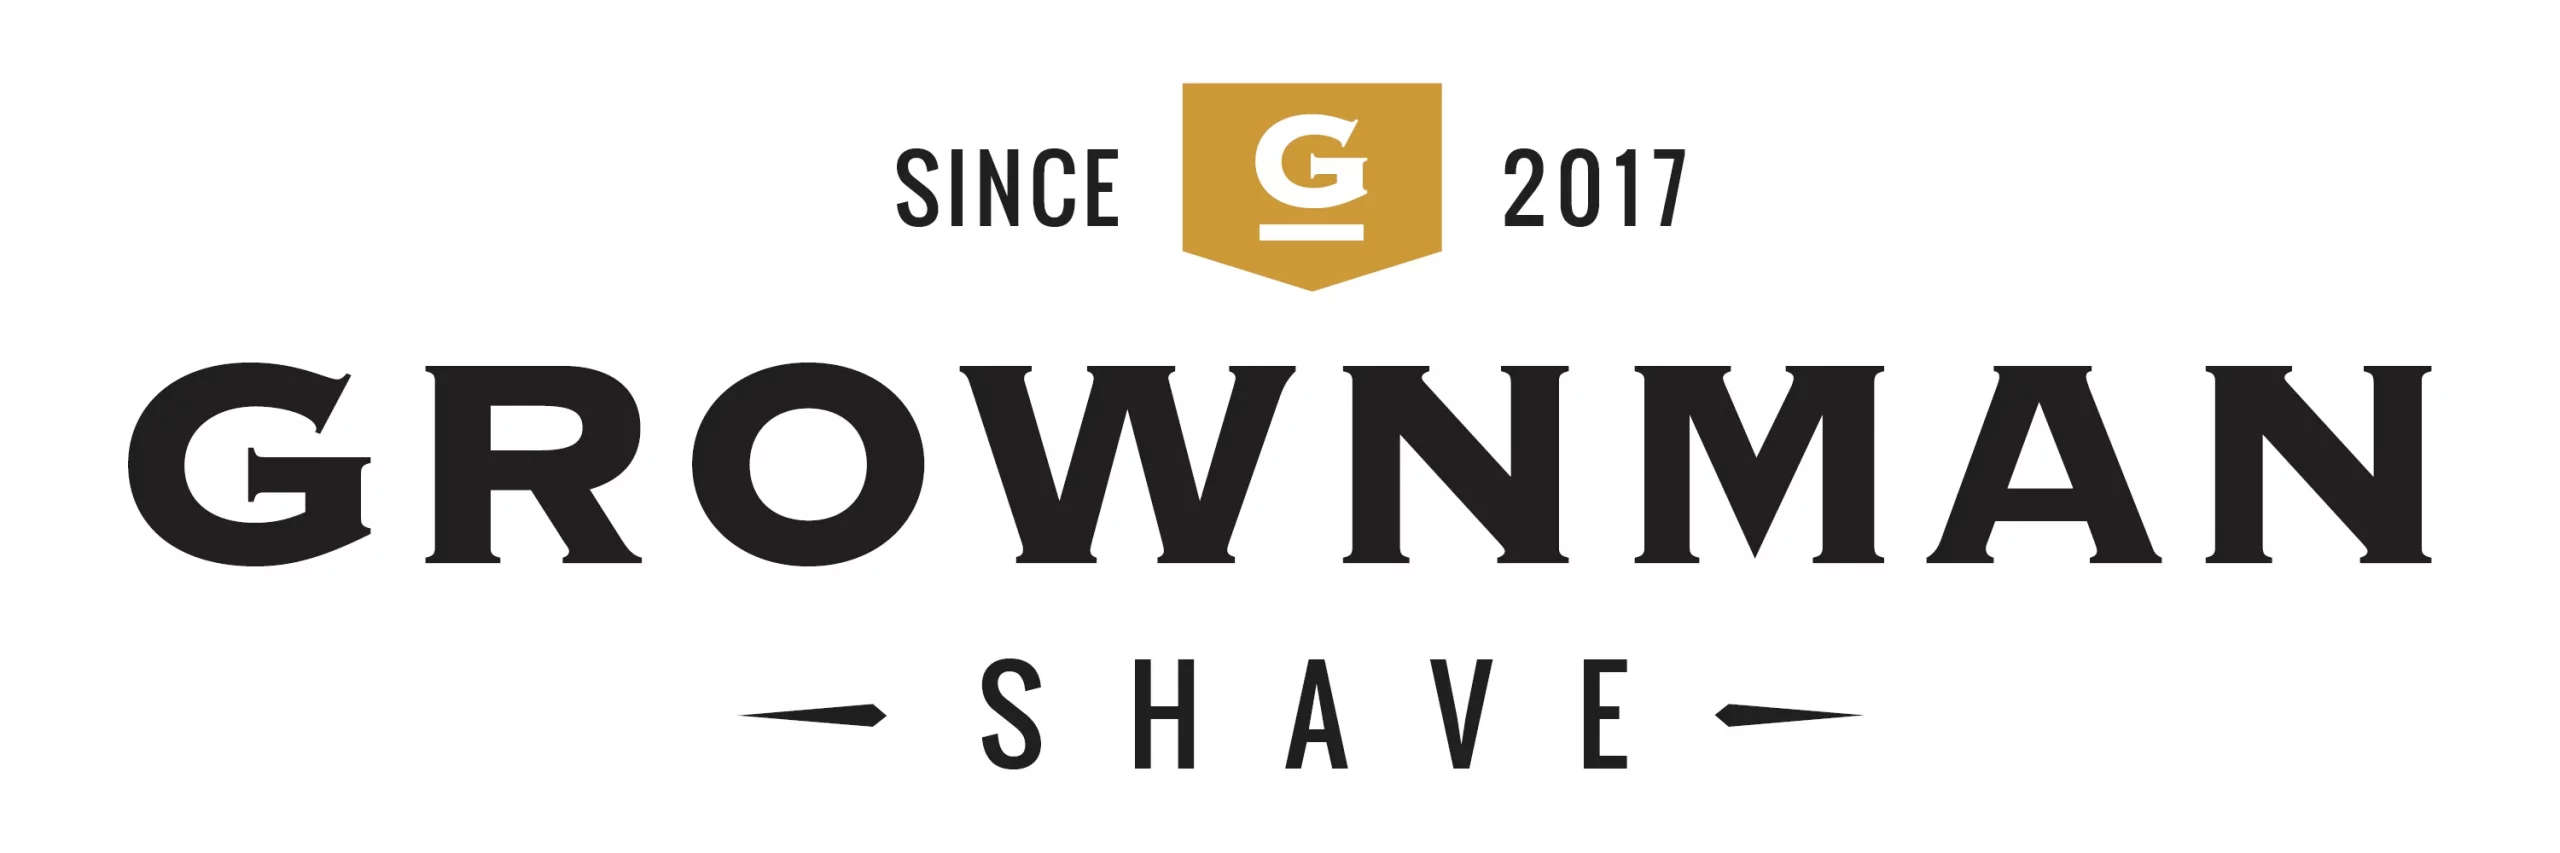 Grownman Shave (Edwin Jagger stockist logo)